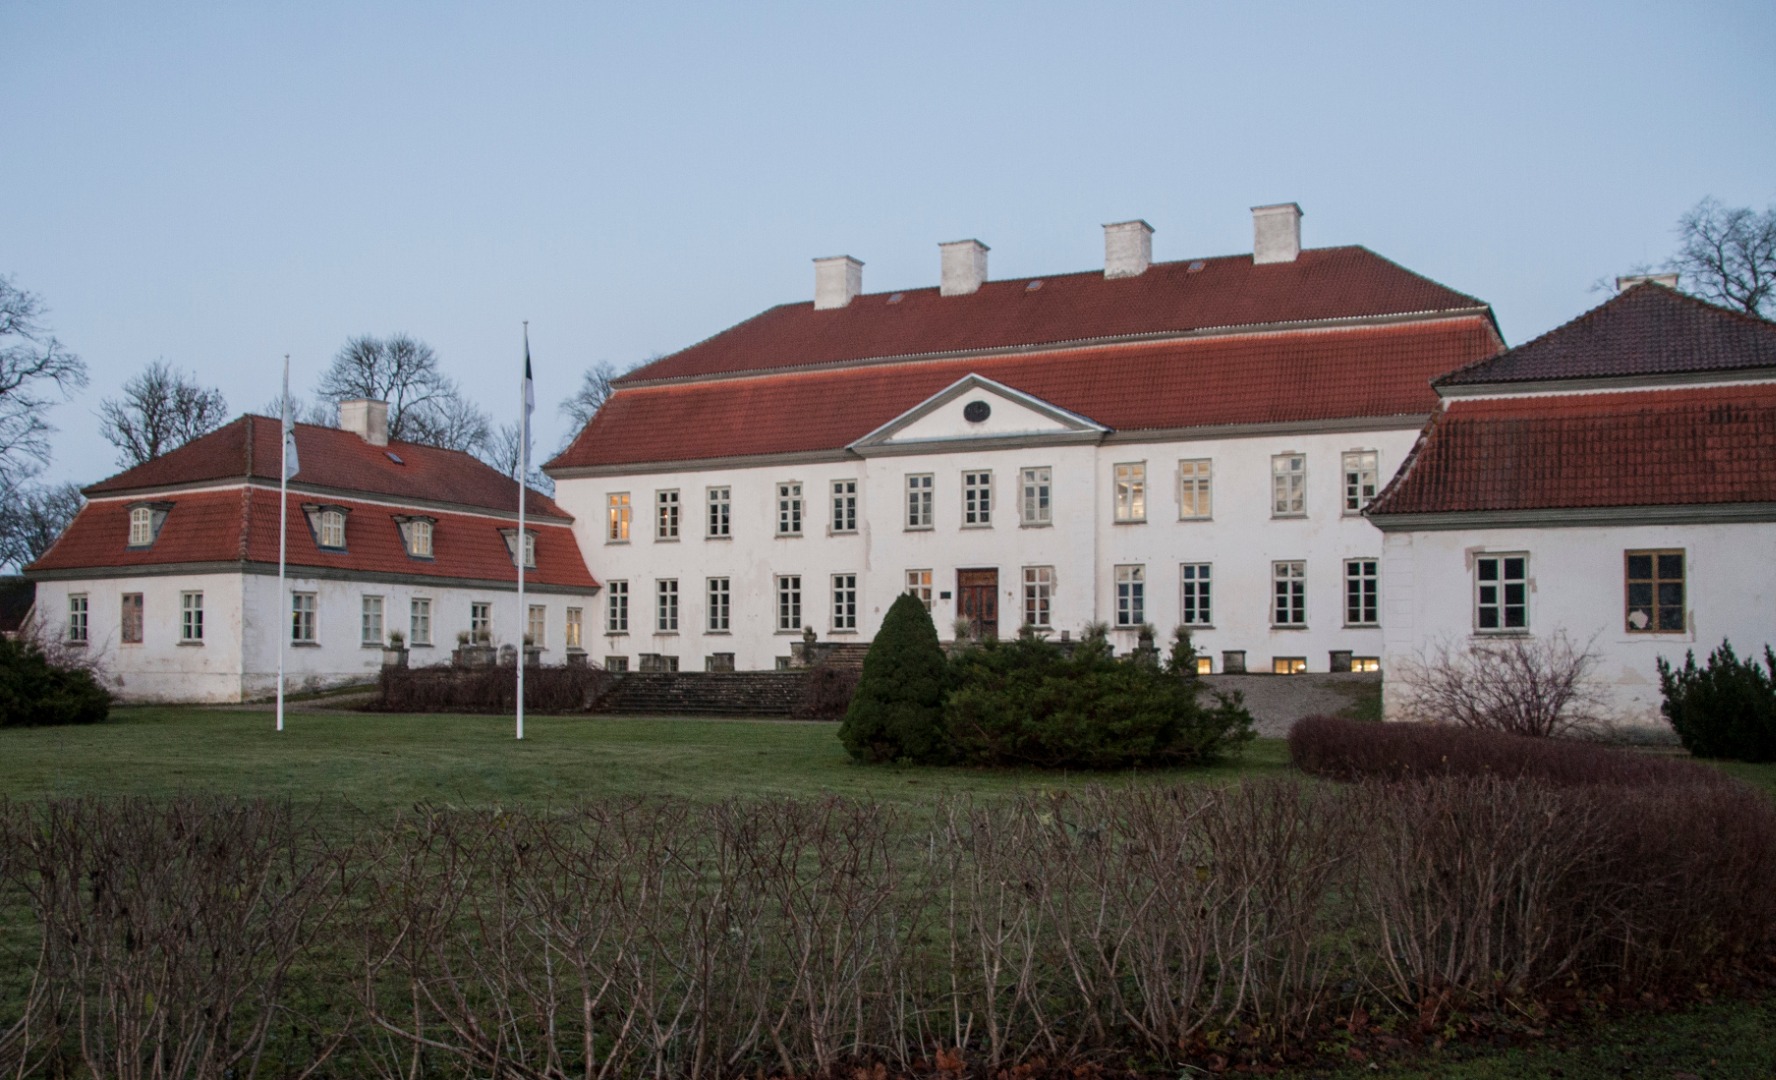 Fassade of Suuremõisa Castle. On the stairs people rephoto